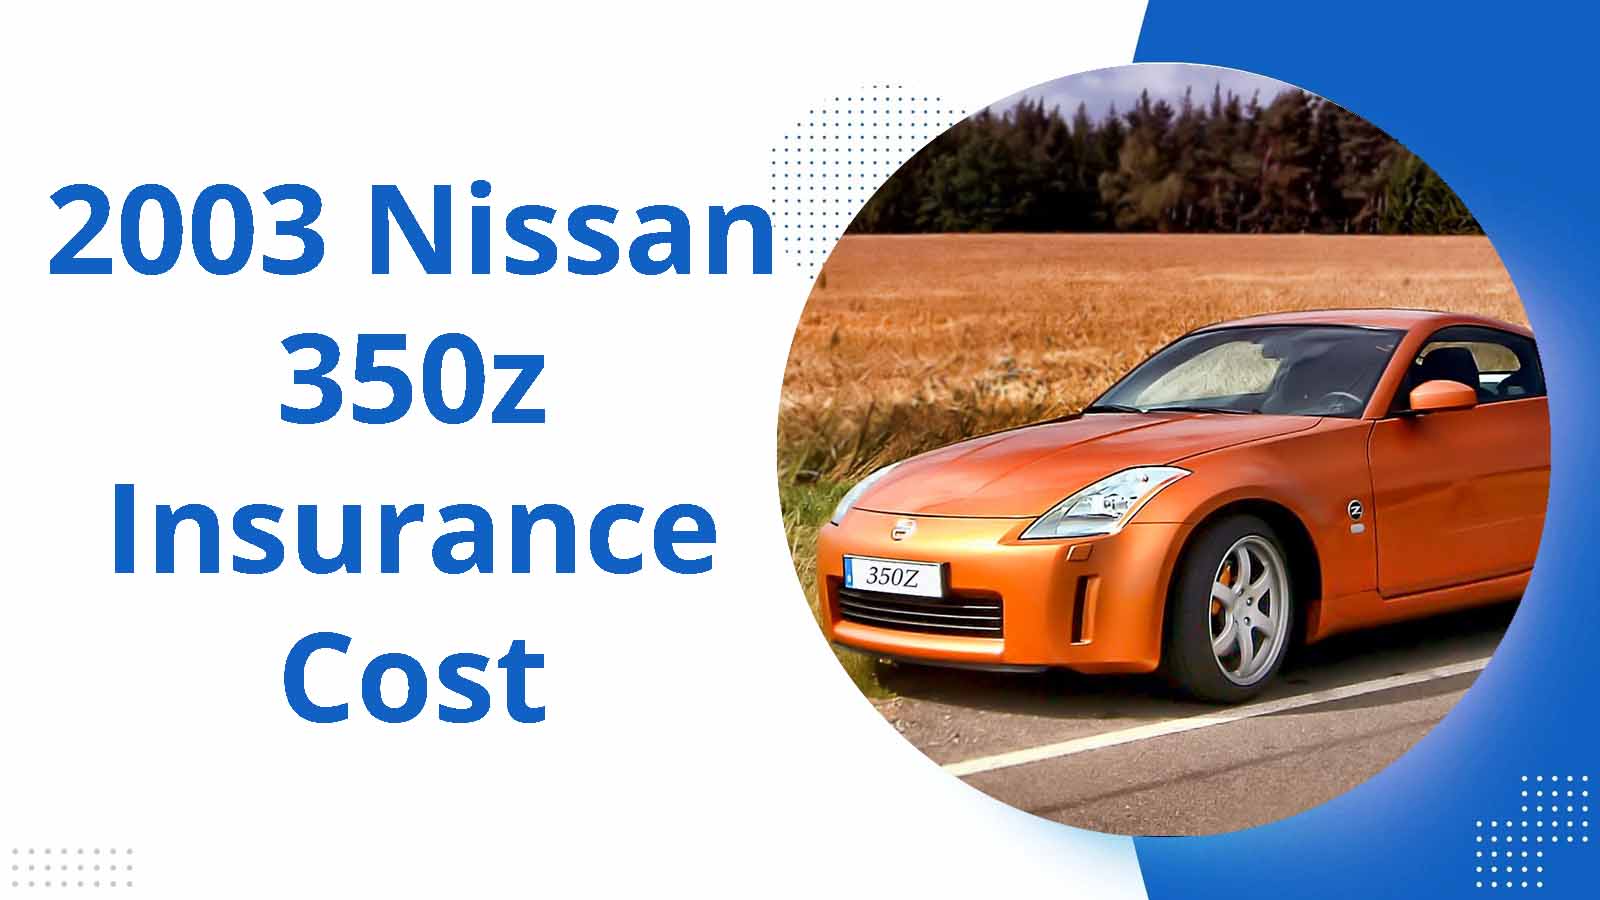 2003 nissan 350z insurance cost Reviewyonline.com